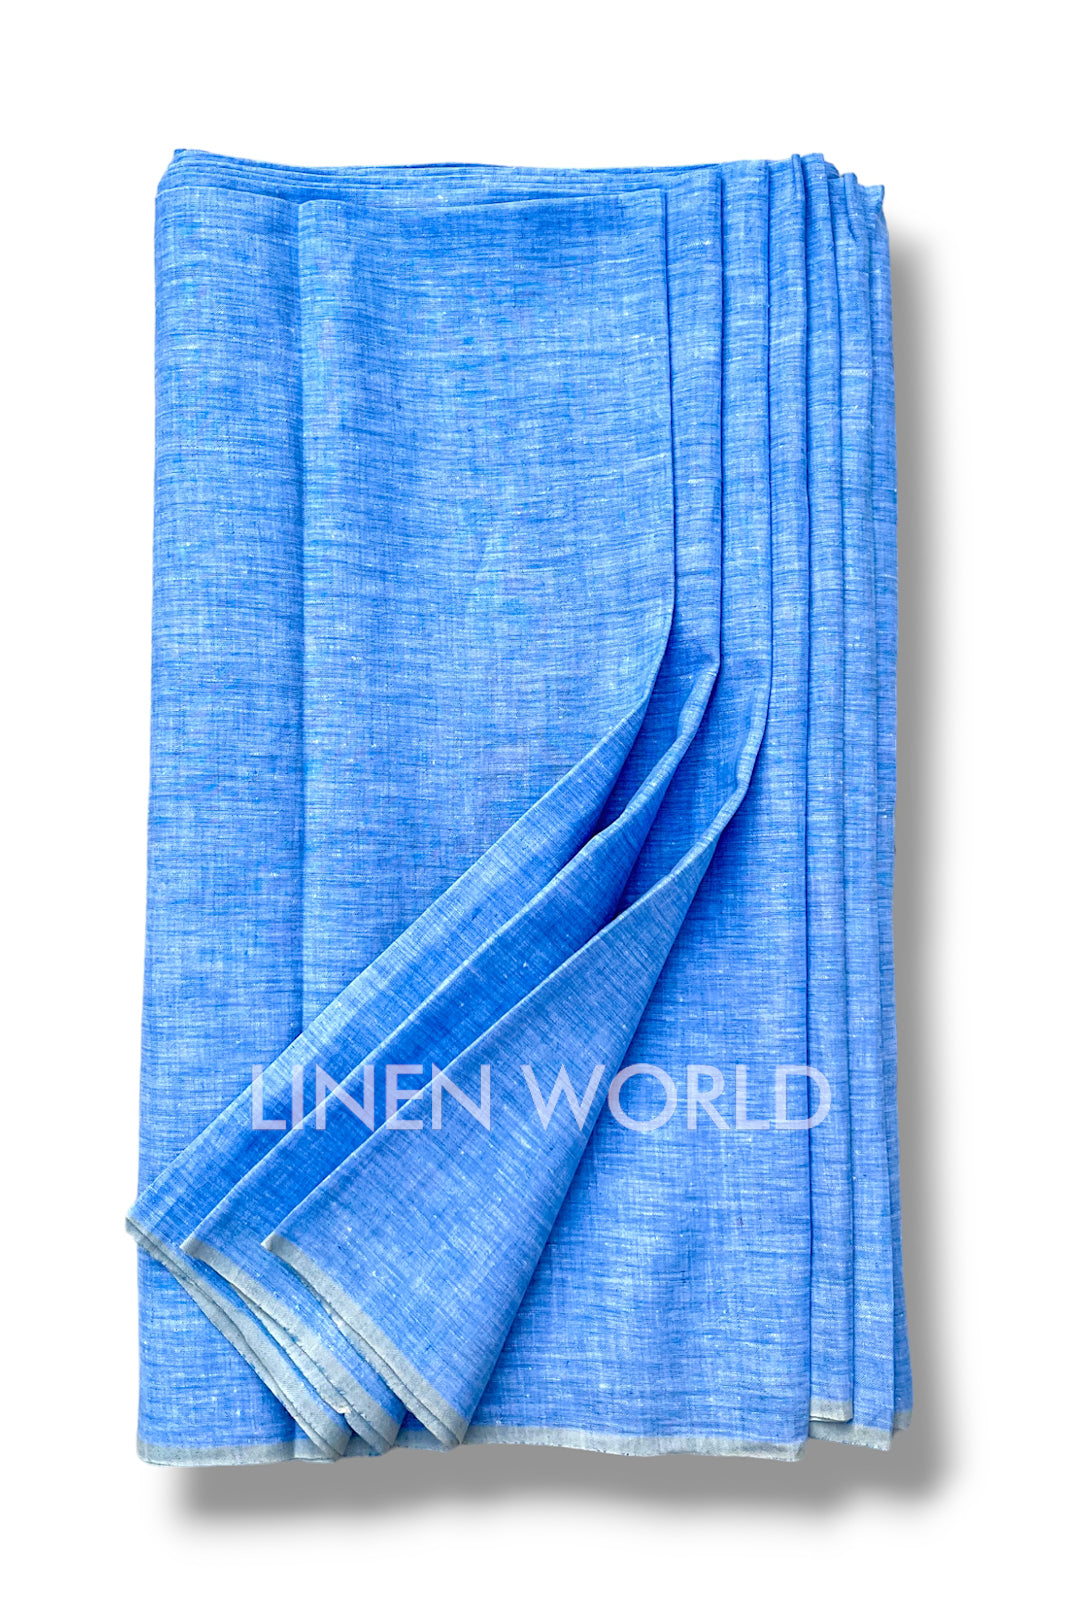 denim blue pure linen 60 lea shirting fabric - linenworldonline.in